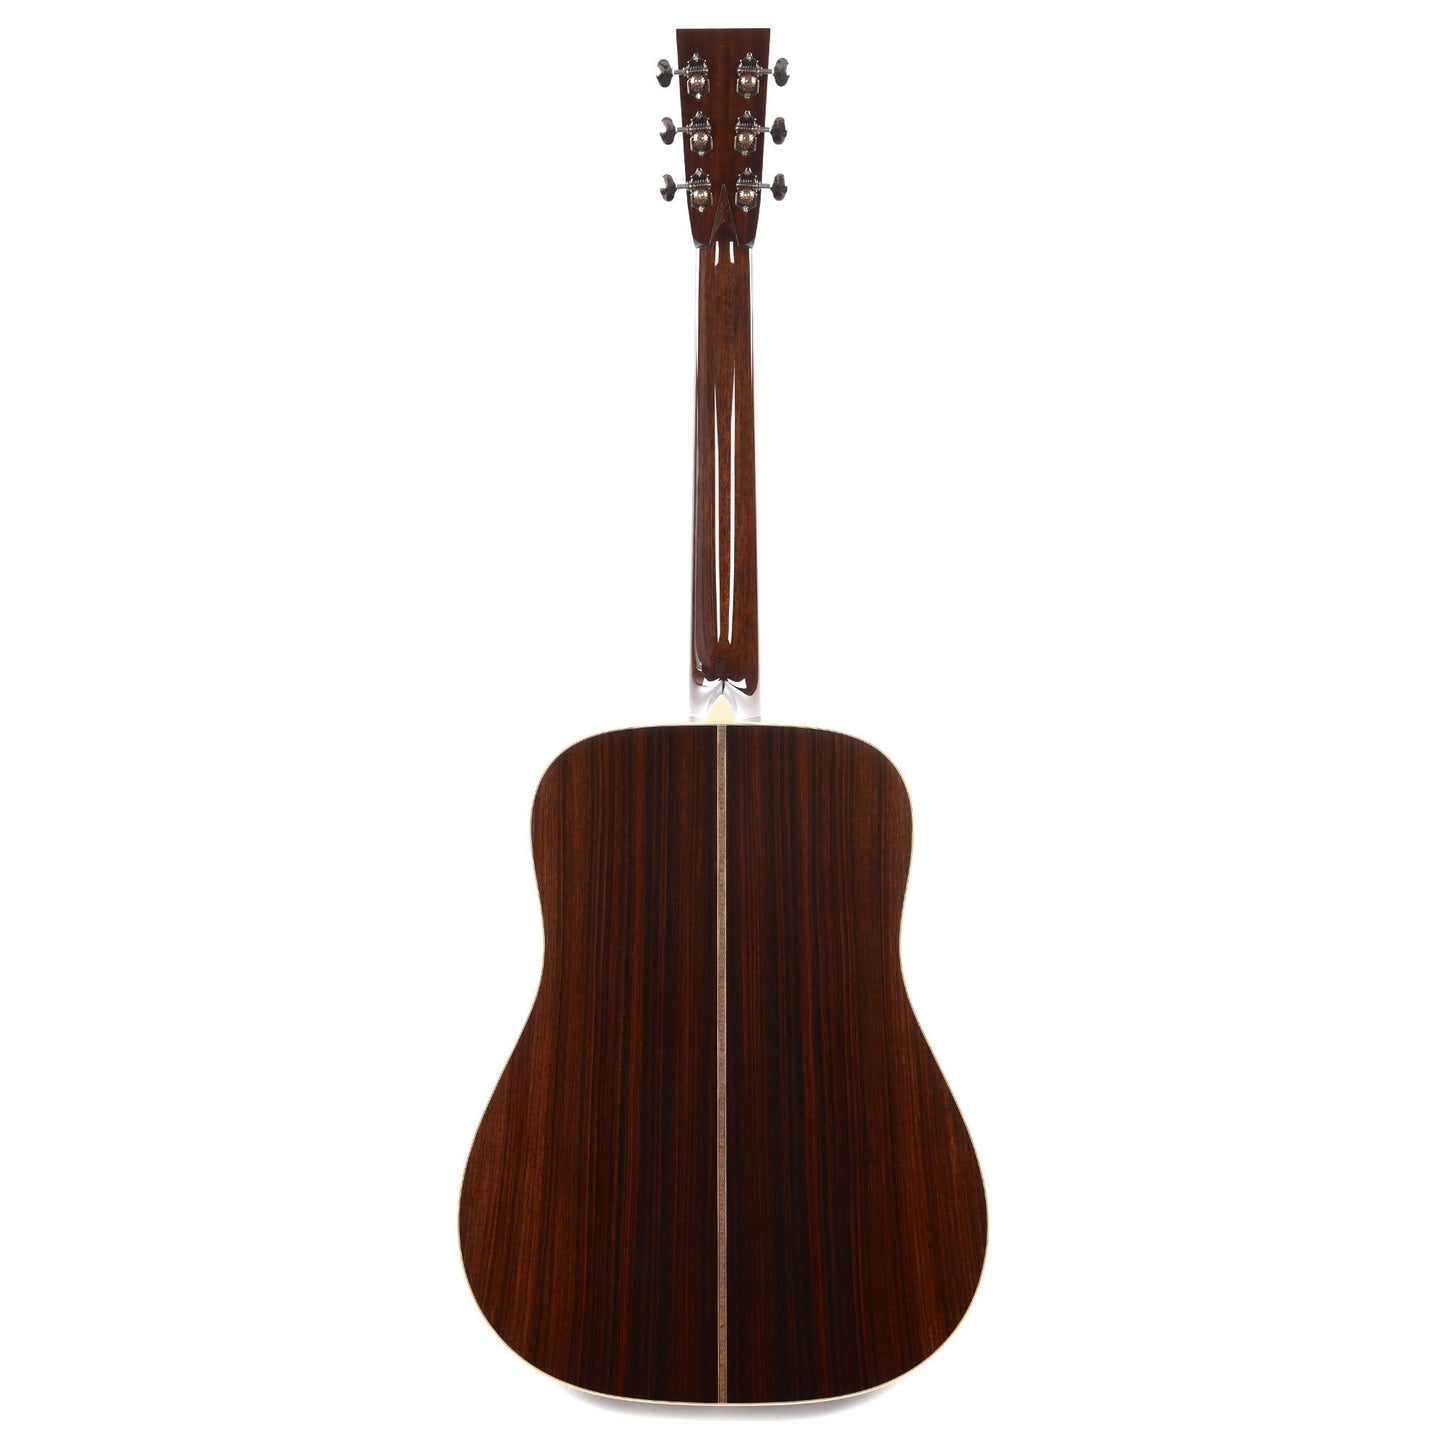 Collings D2H T Sitka/E. Indian Rosewood Sunburst Acoustic Guitars / Dreadnought